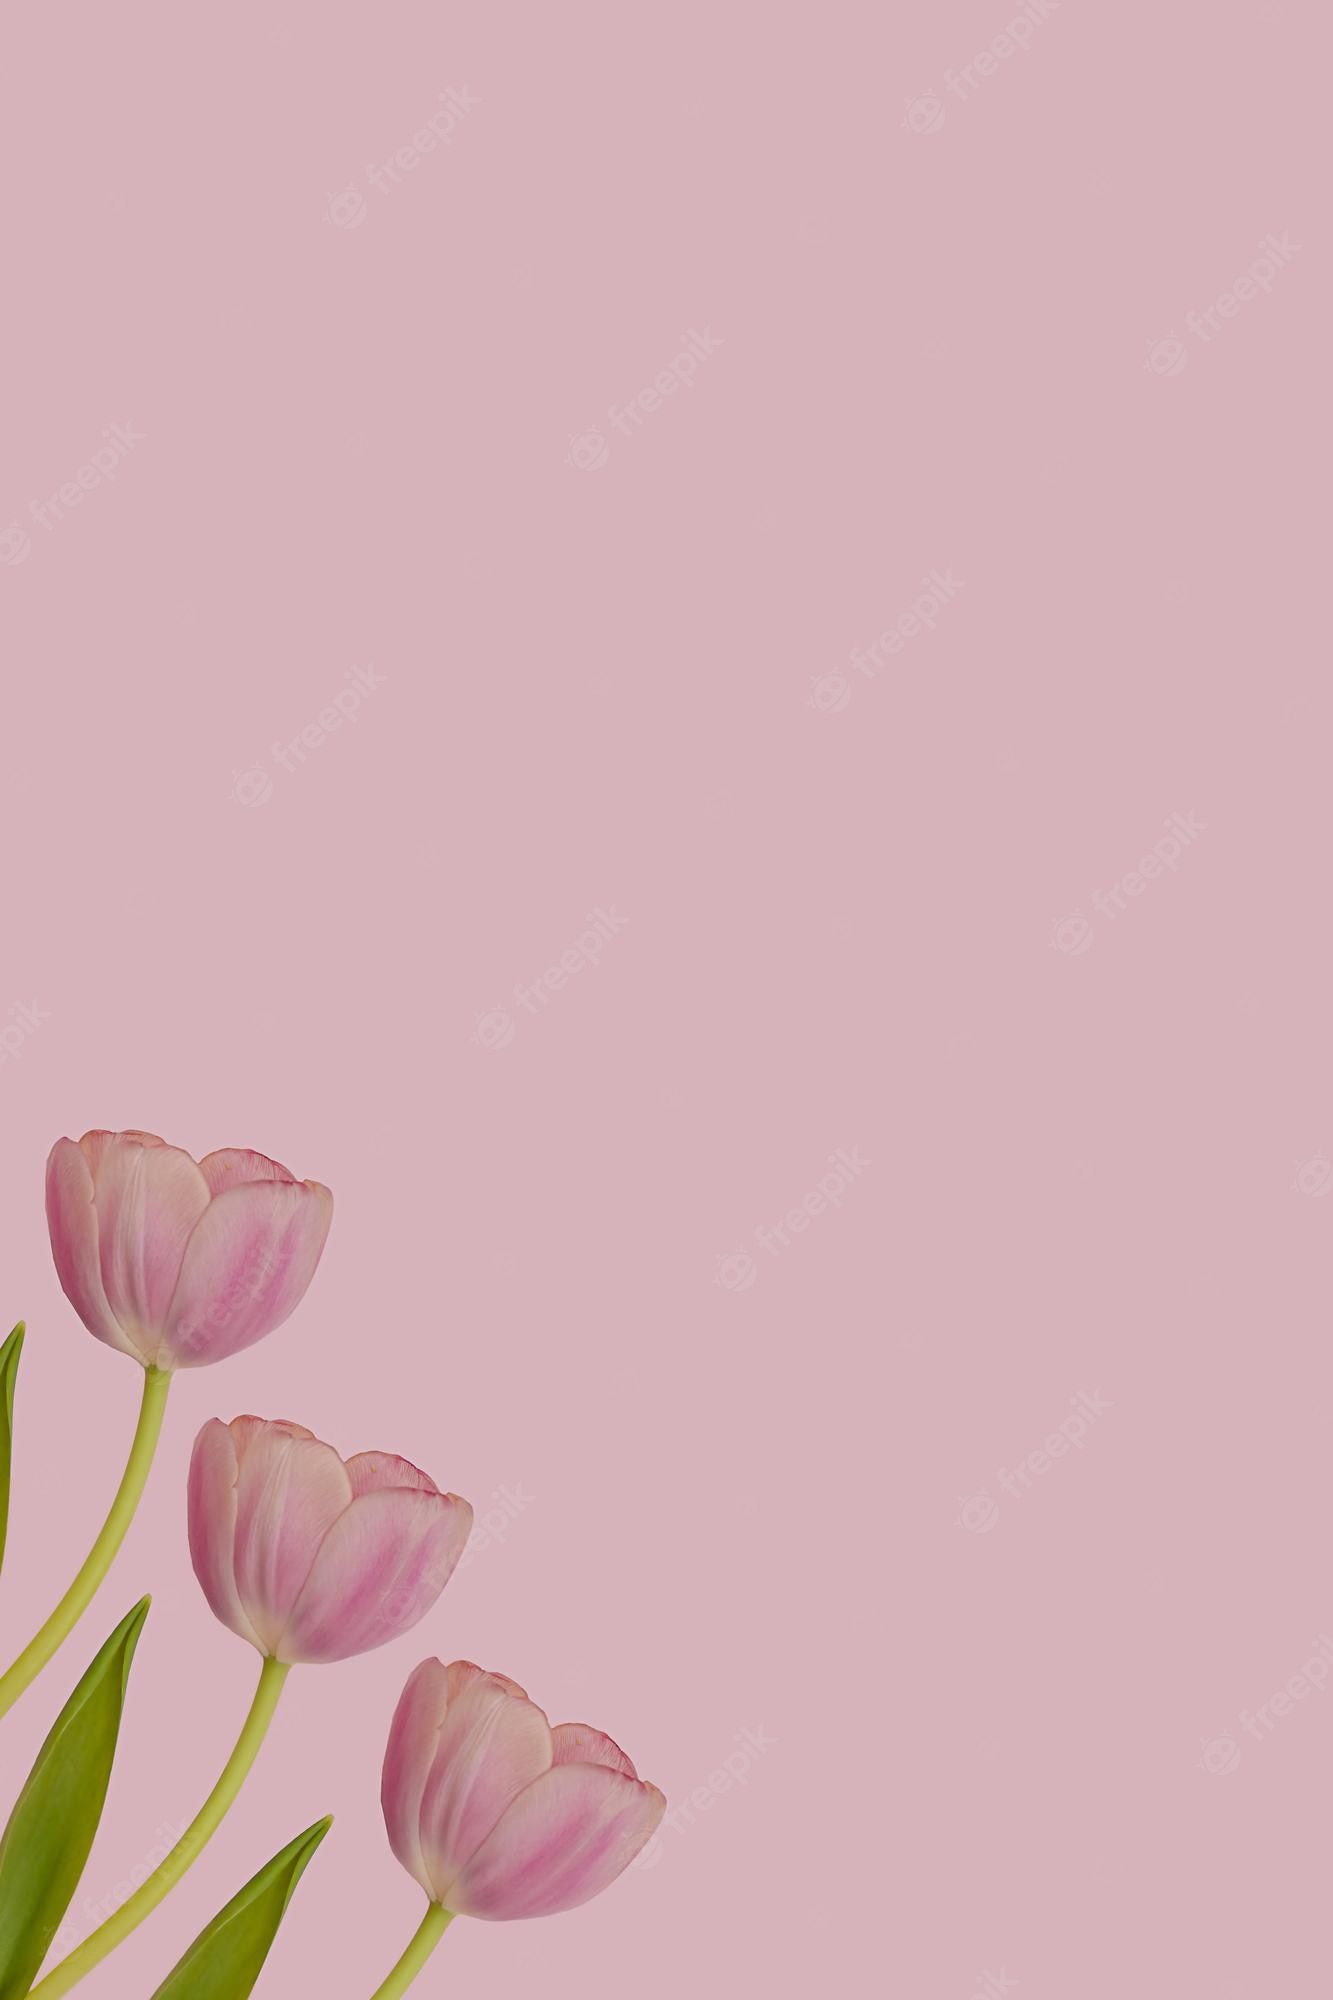 Pink Tulips Wallpaper Image